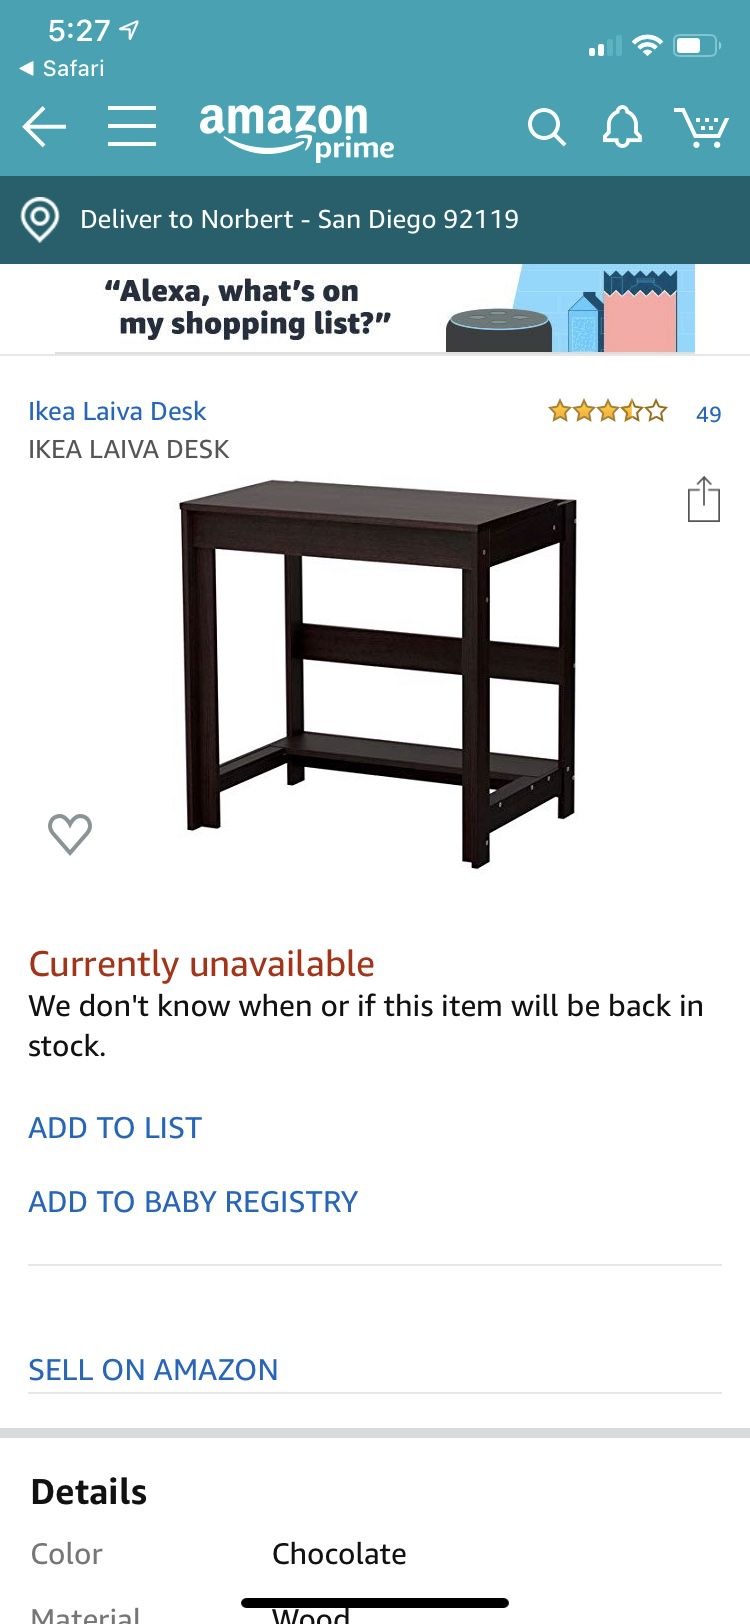 IKEA Laiva Desk Chocolate Color